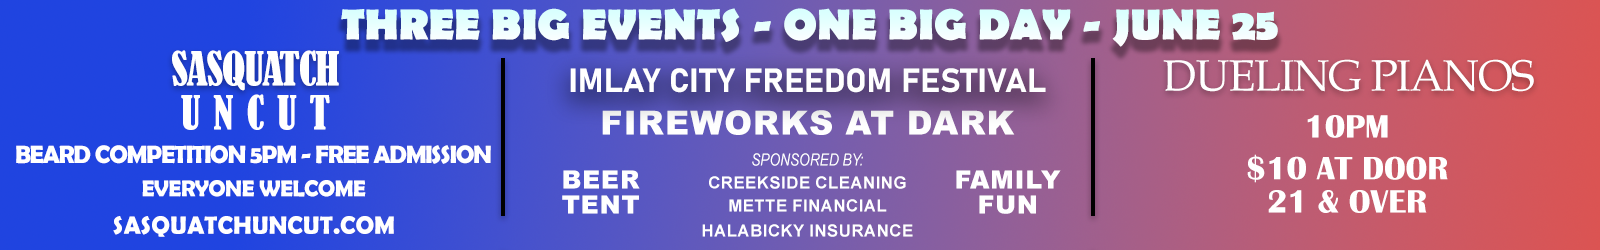 Imlay City Freedom Festival - June 25th